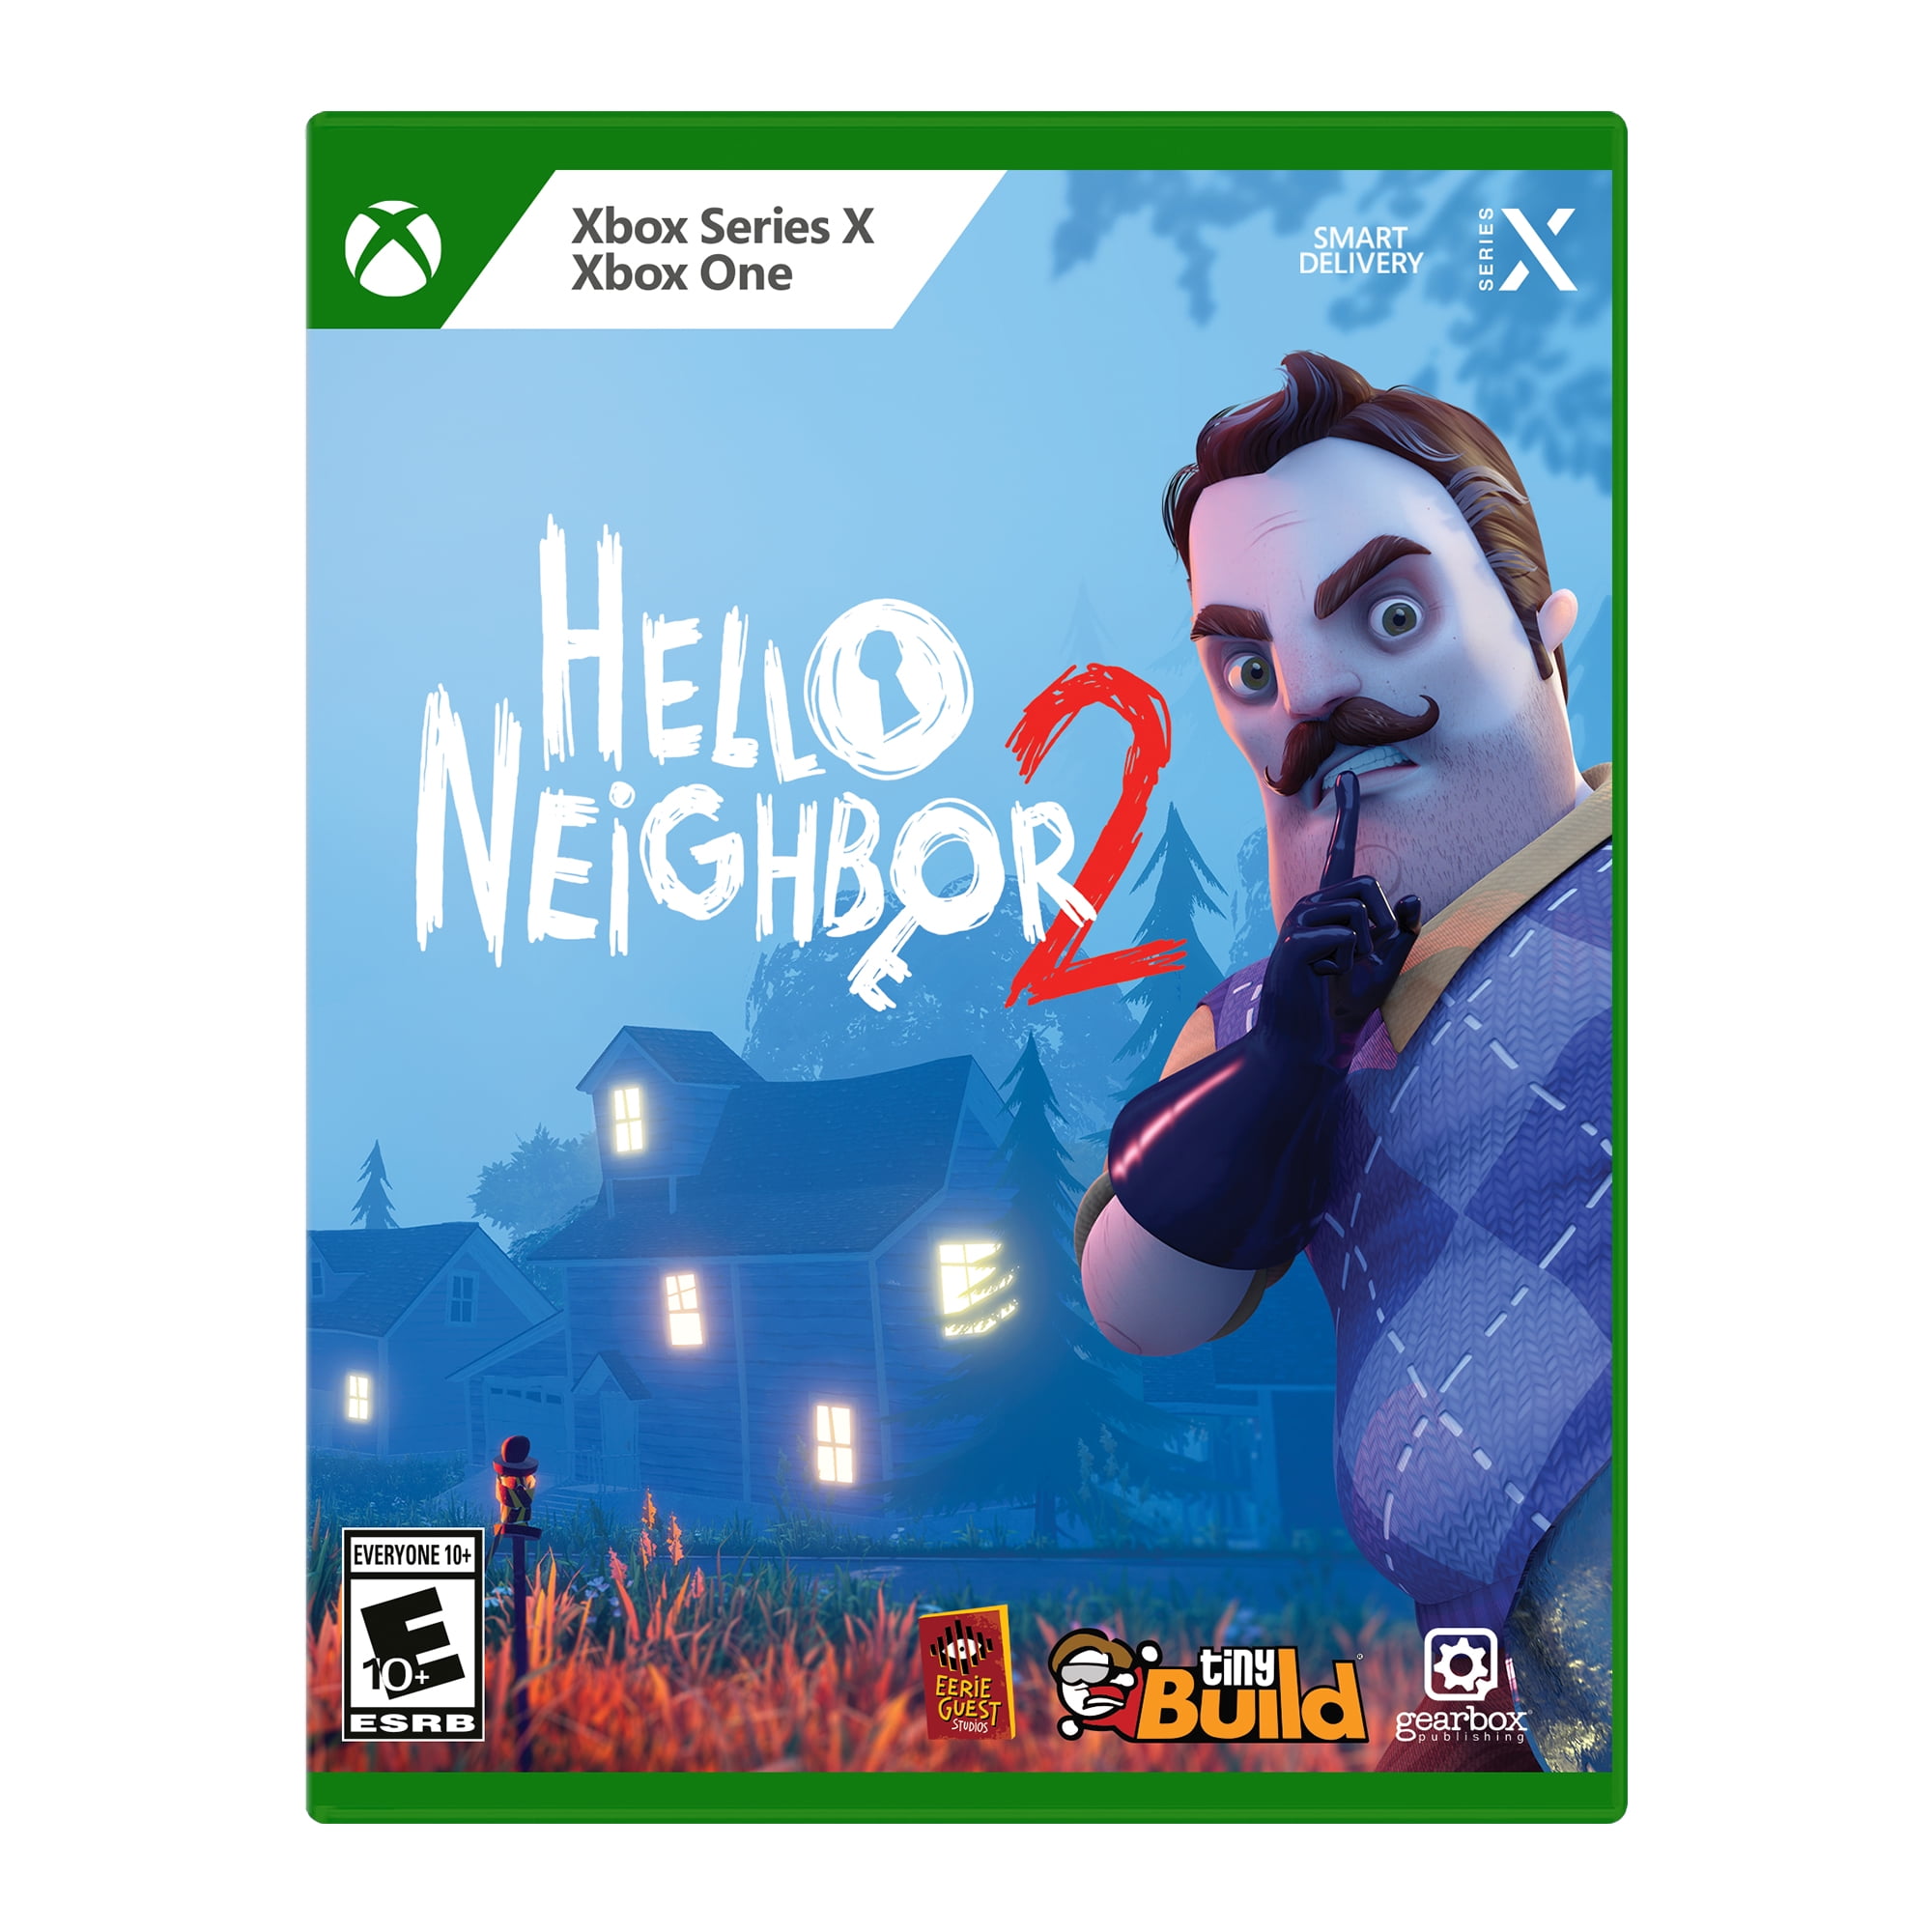 YMMV Hello Neighbor 2 - Xbox Series X $5